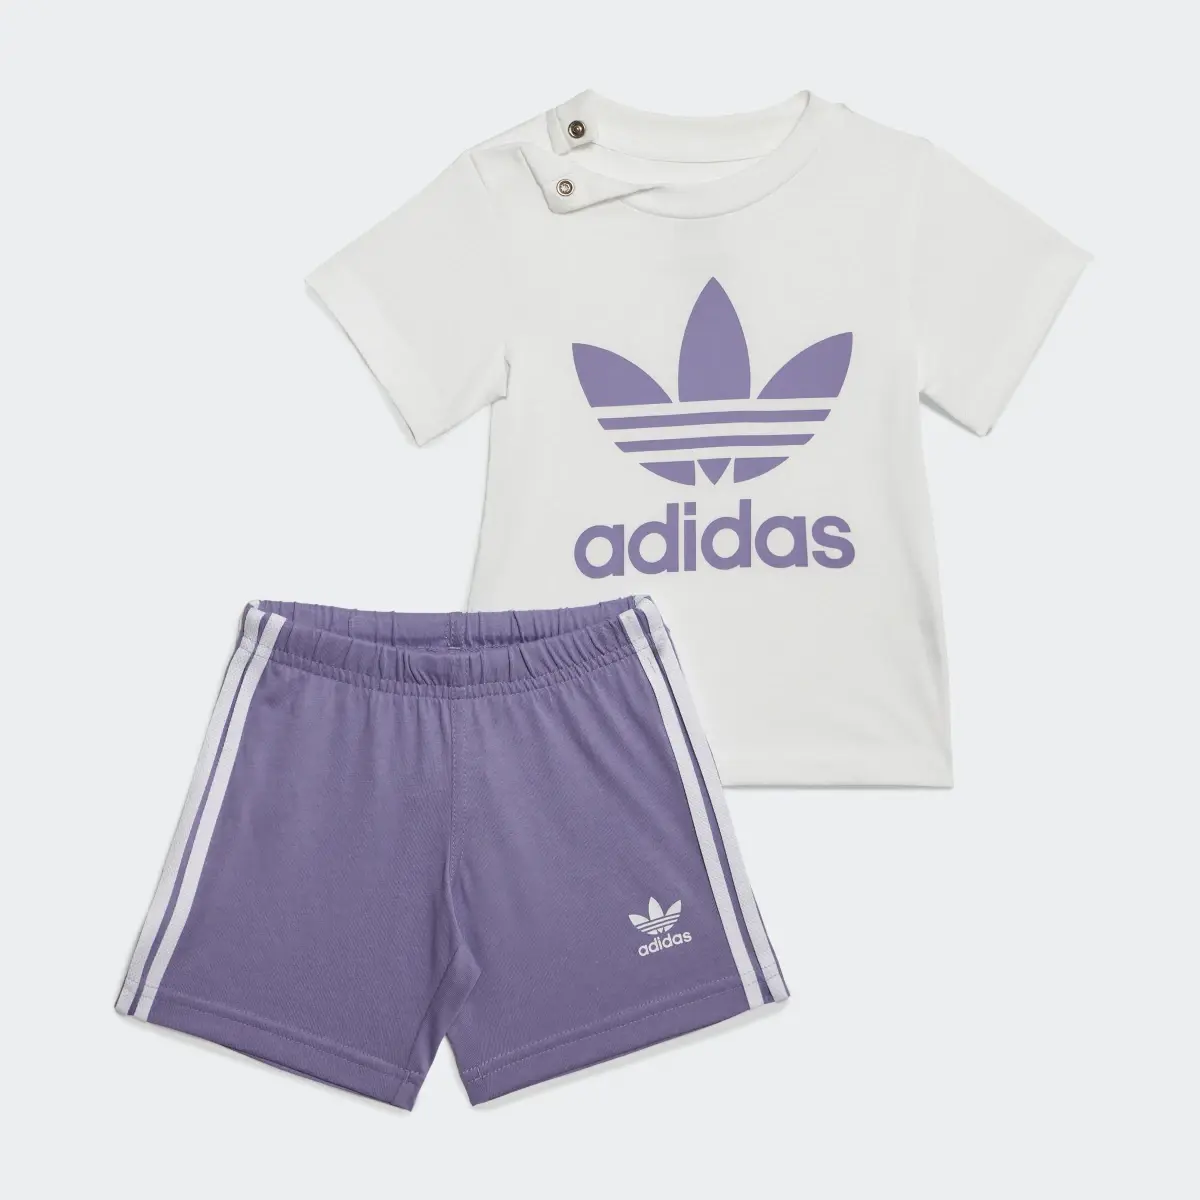 Adidas Conjunto Trifolio Shorts Tee (UNISEX). 2